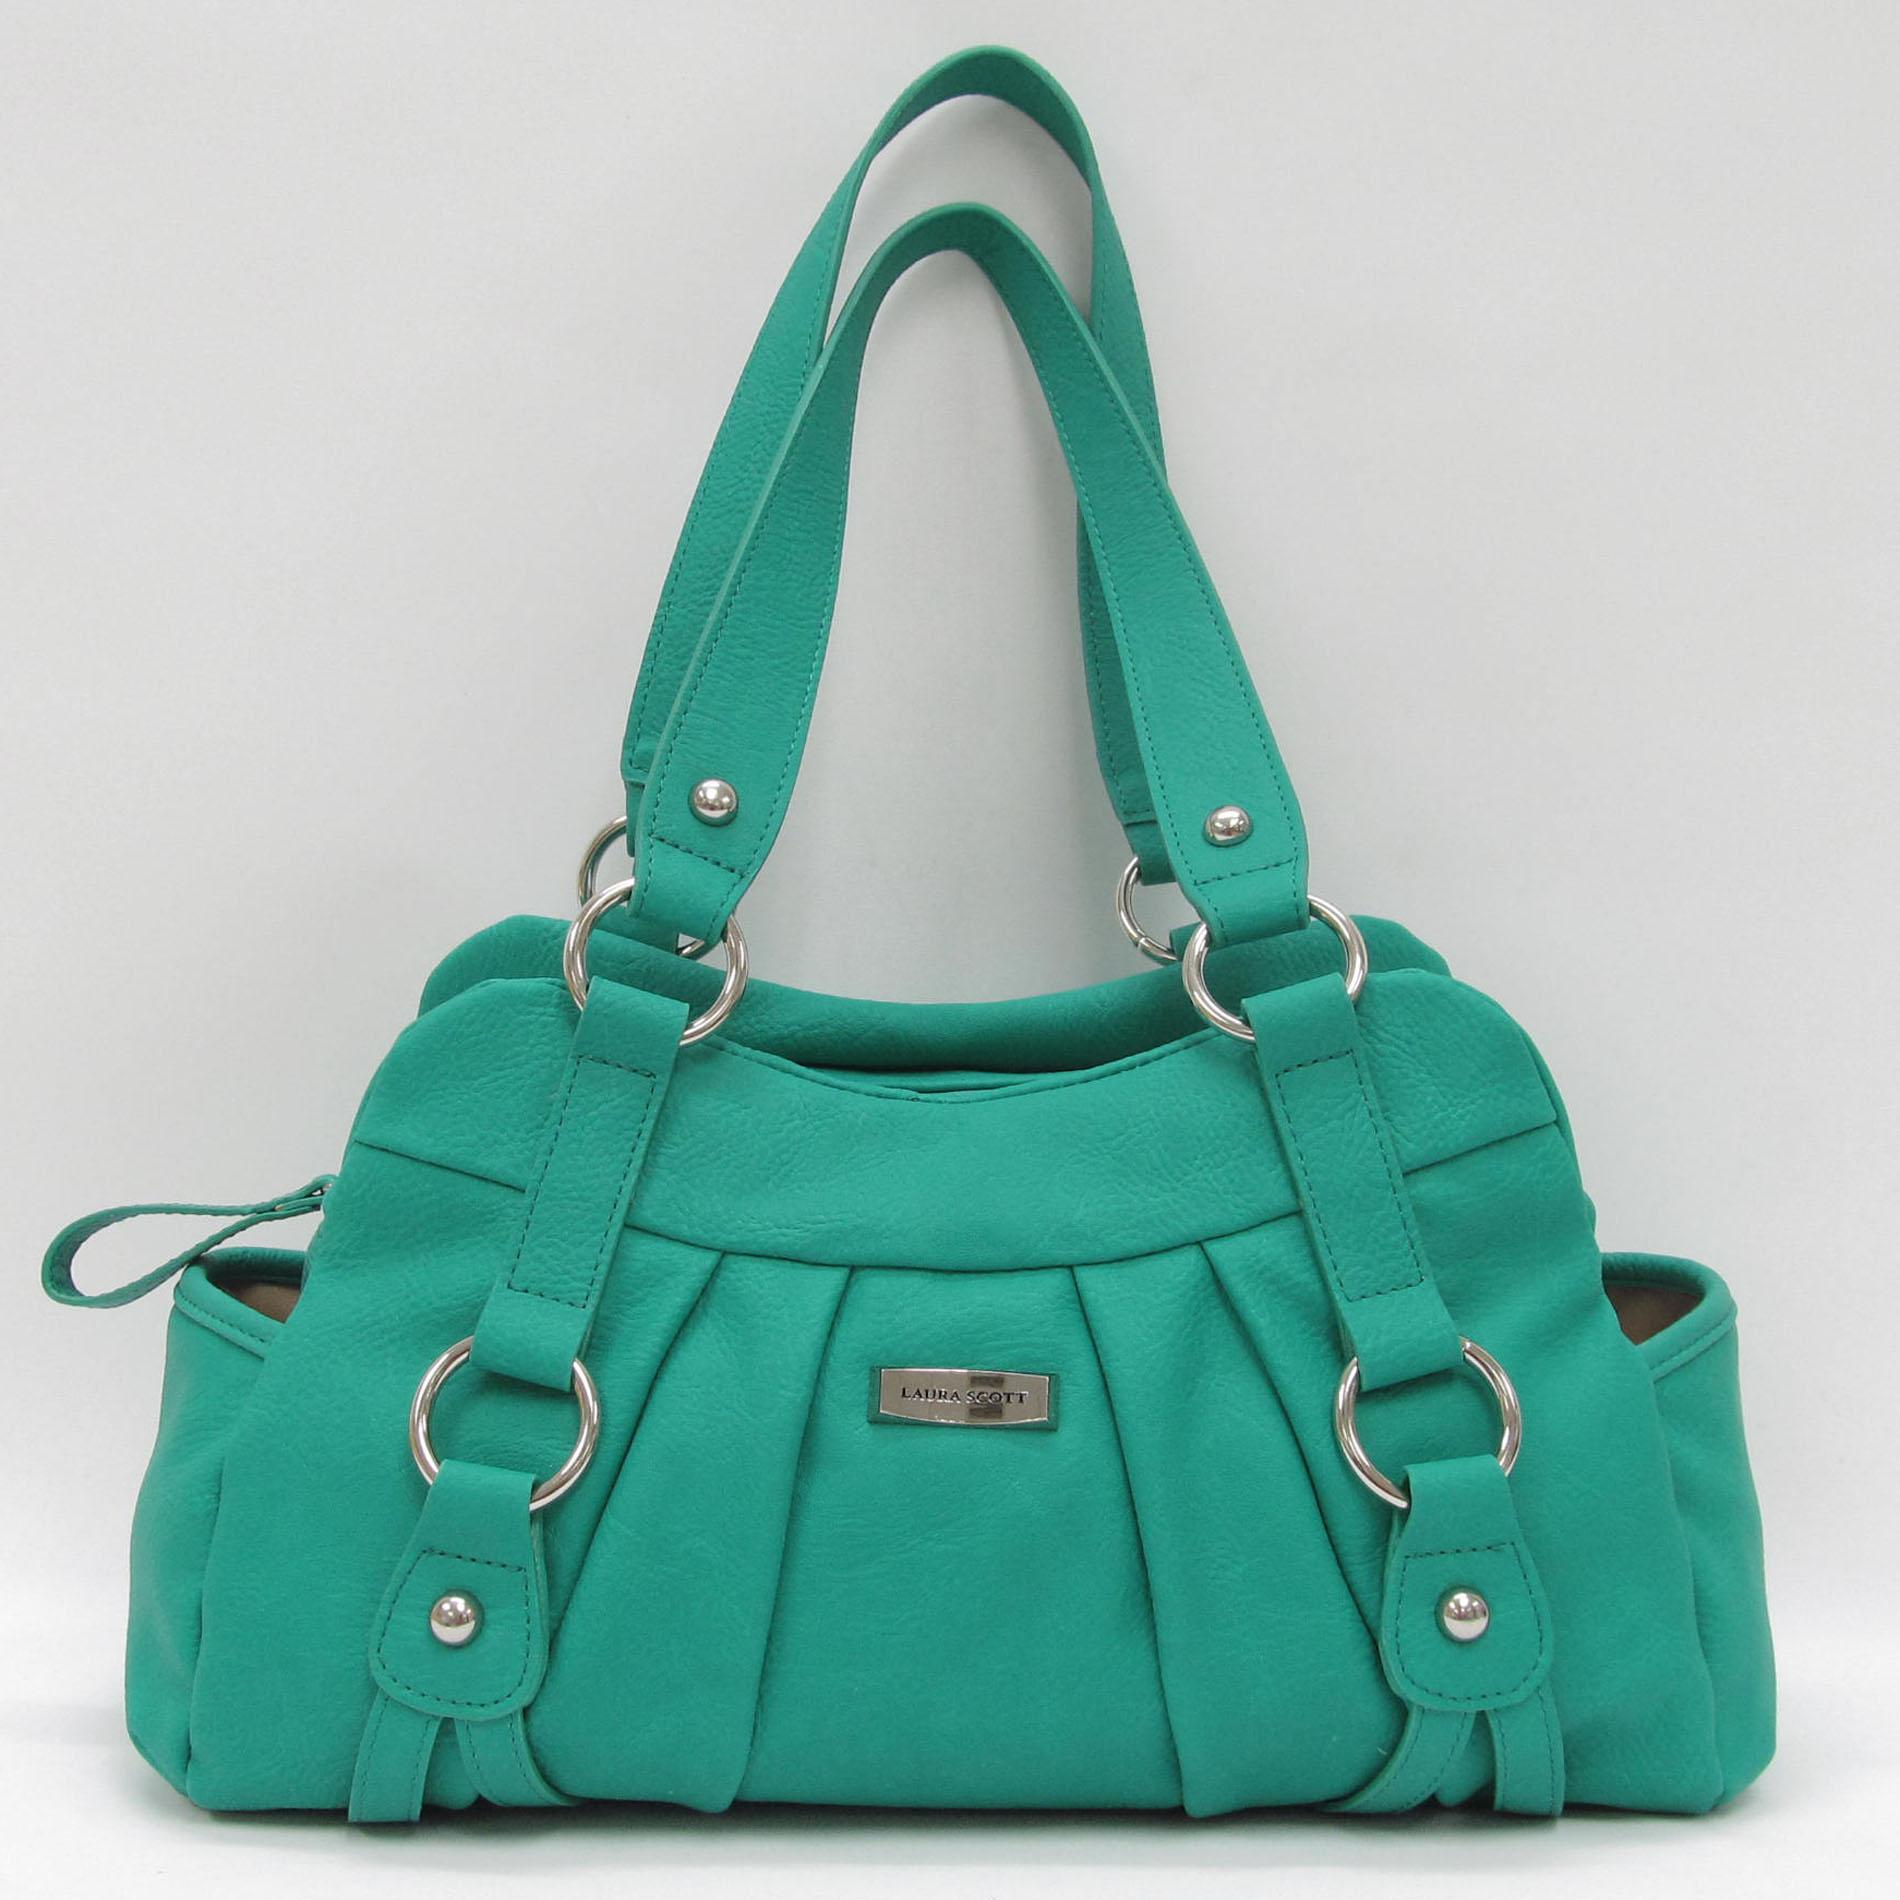 Laura Scott Women's Jasmin Satchel Handbag - Faux Leather